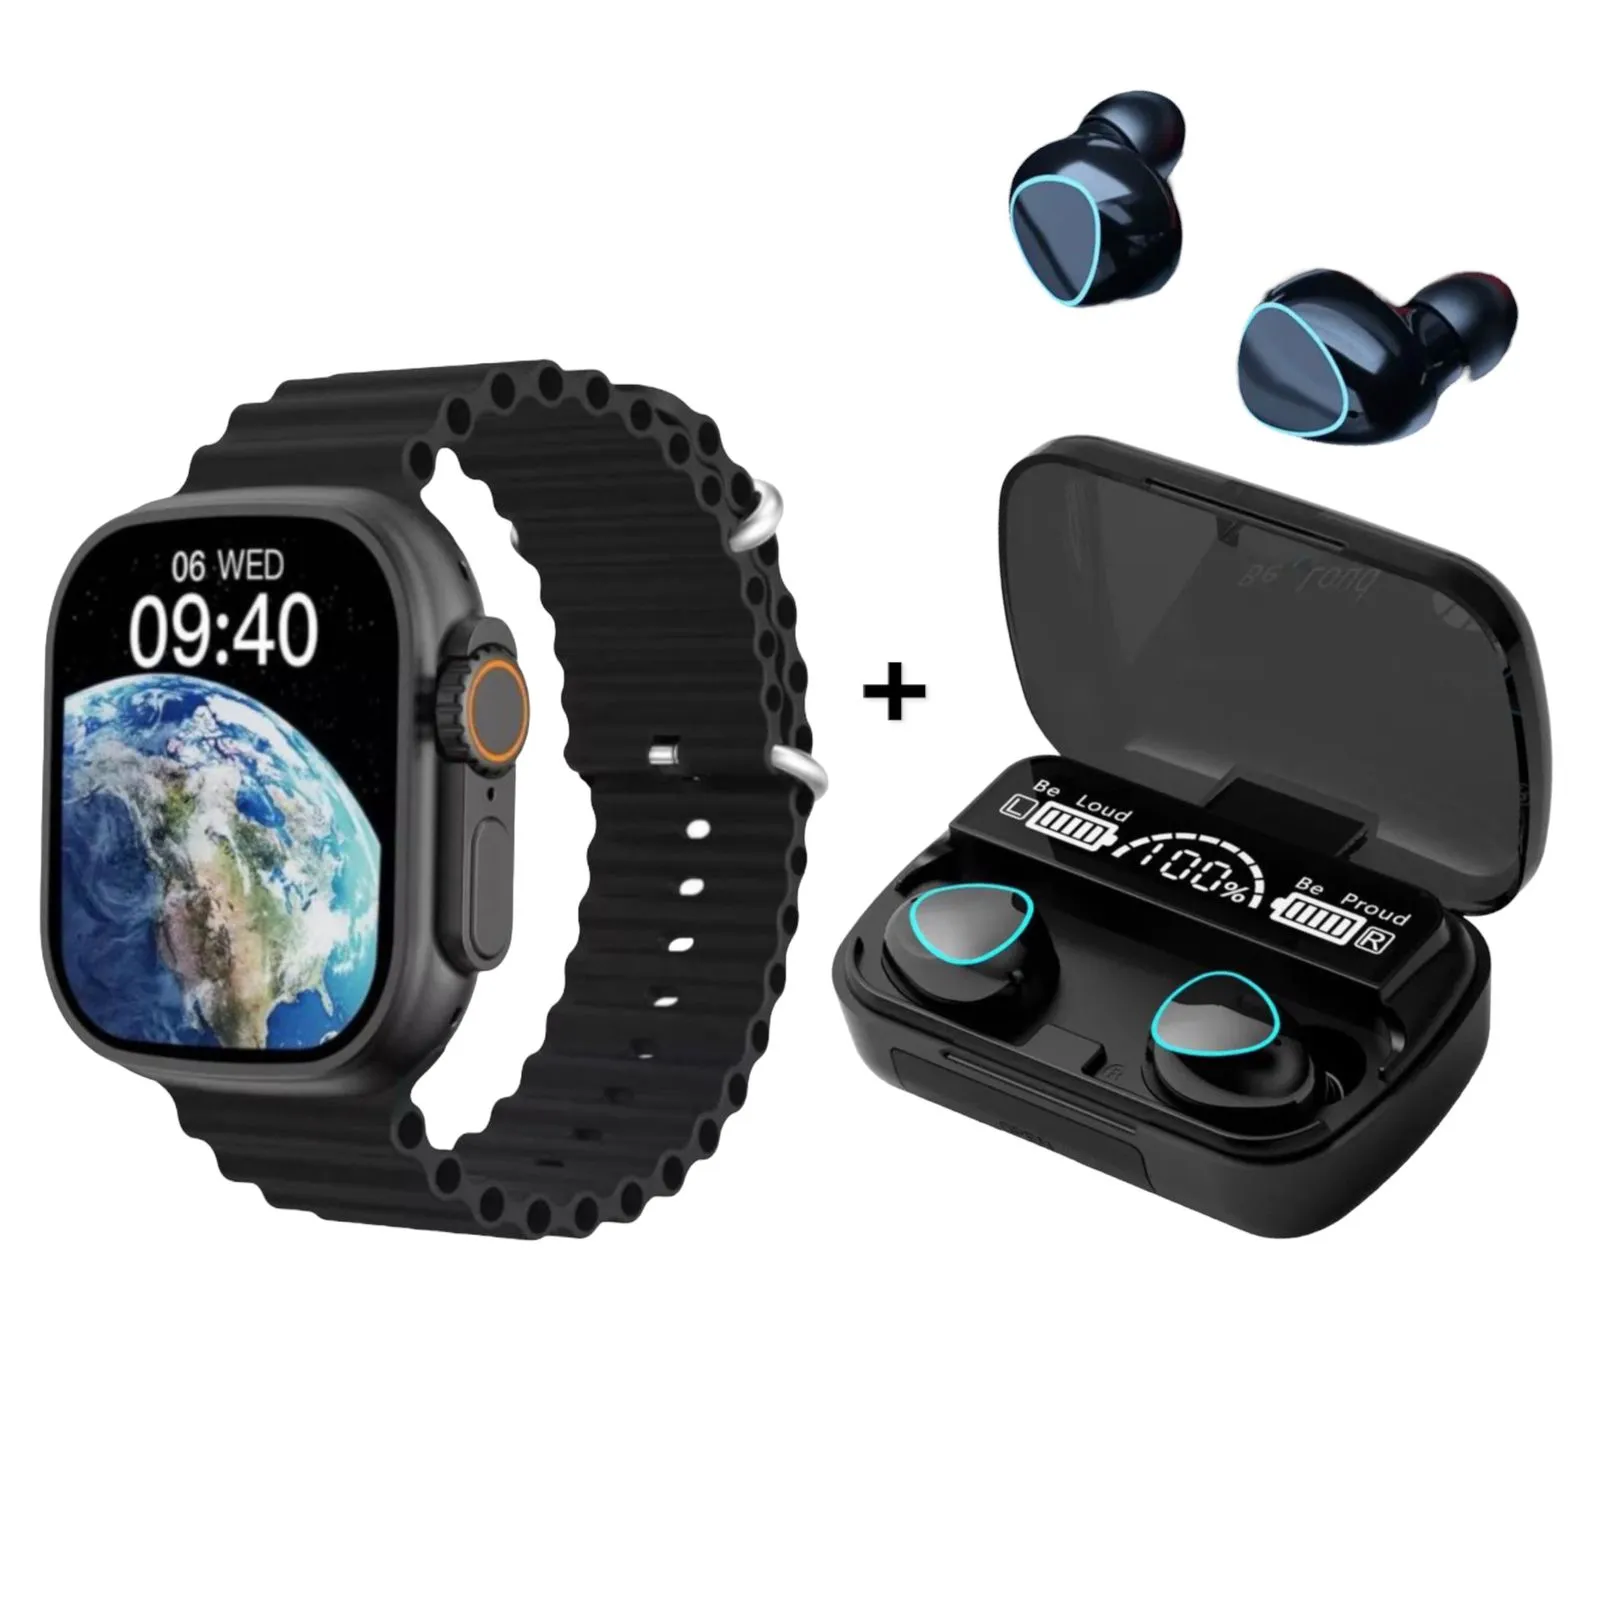 Reloj Smartwacth + Audífono Bluetooth M10